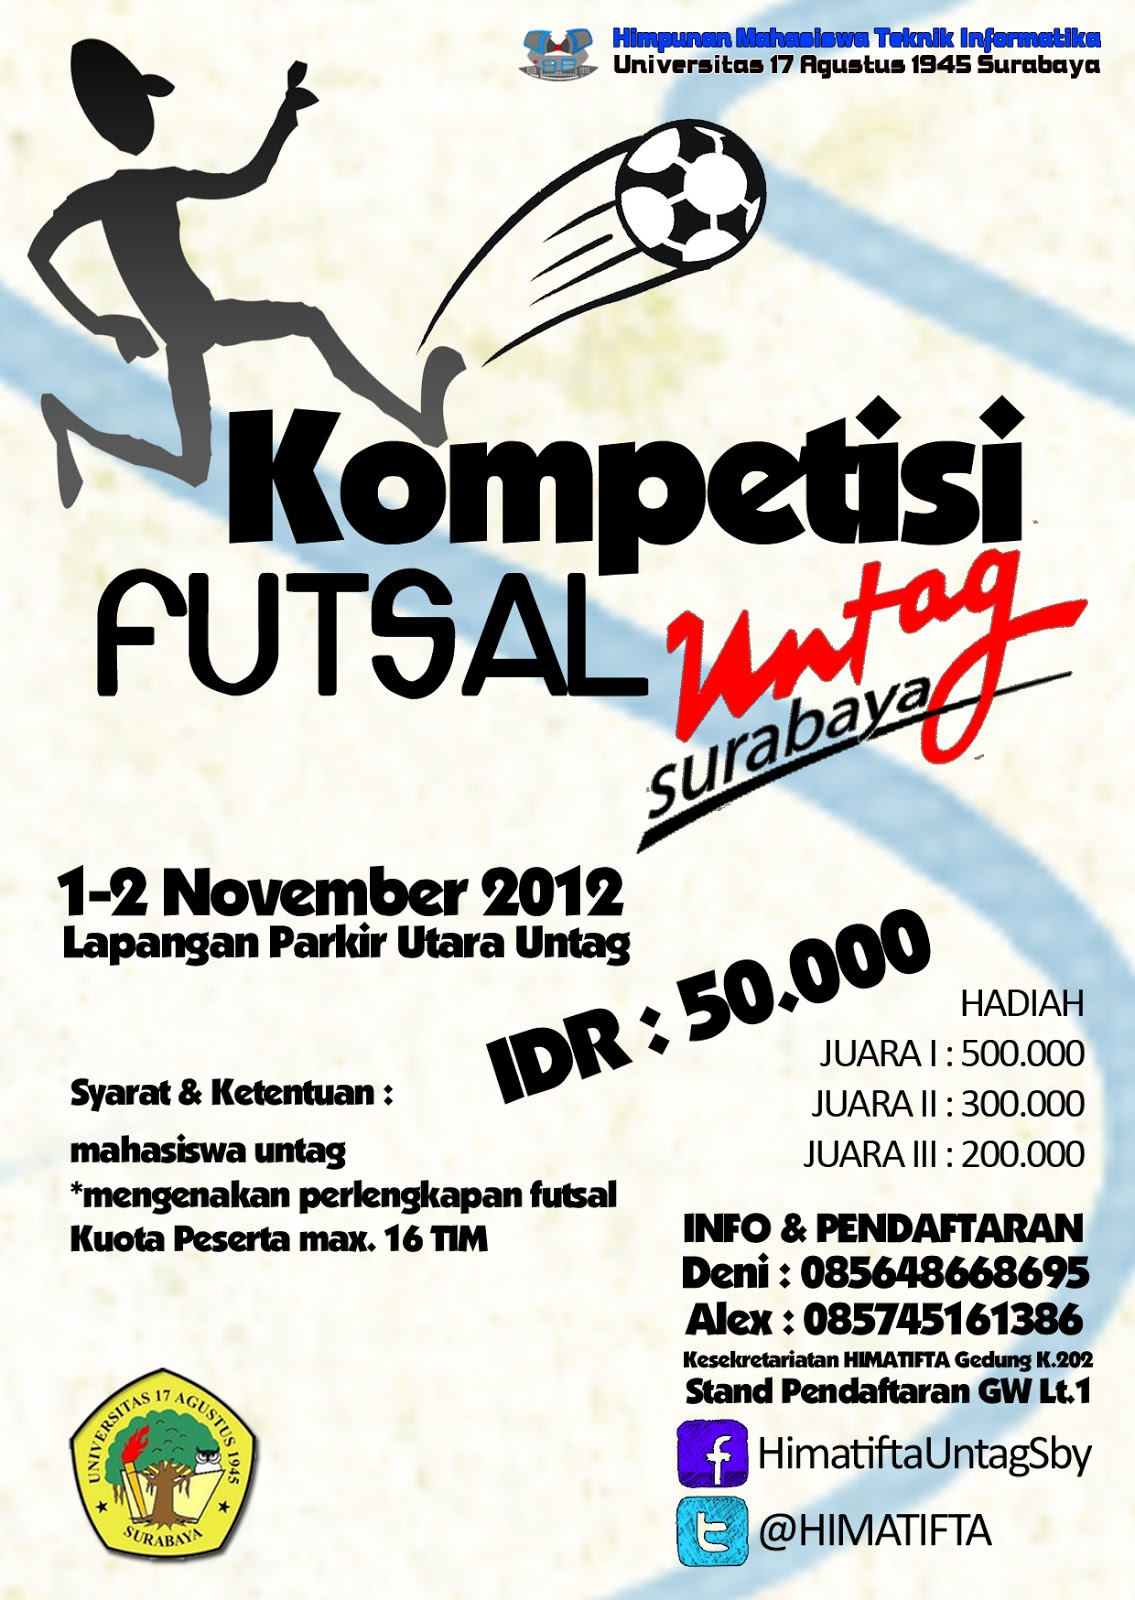 Situz goblog pasti pinter: Kompetisi Futsal Untag Surabaya 